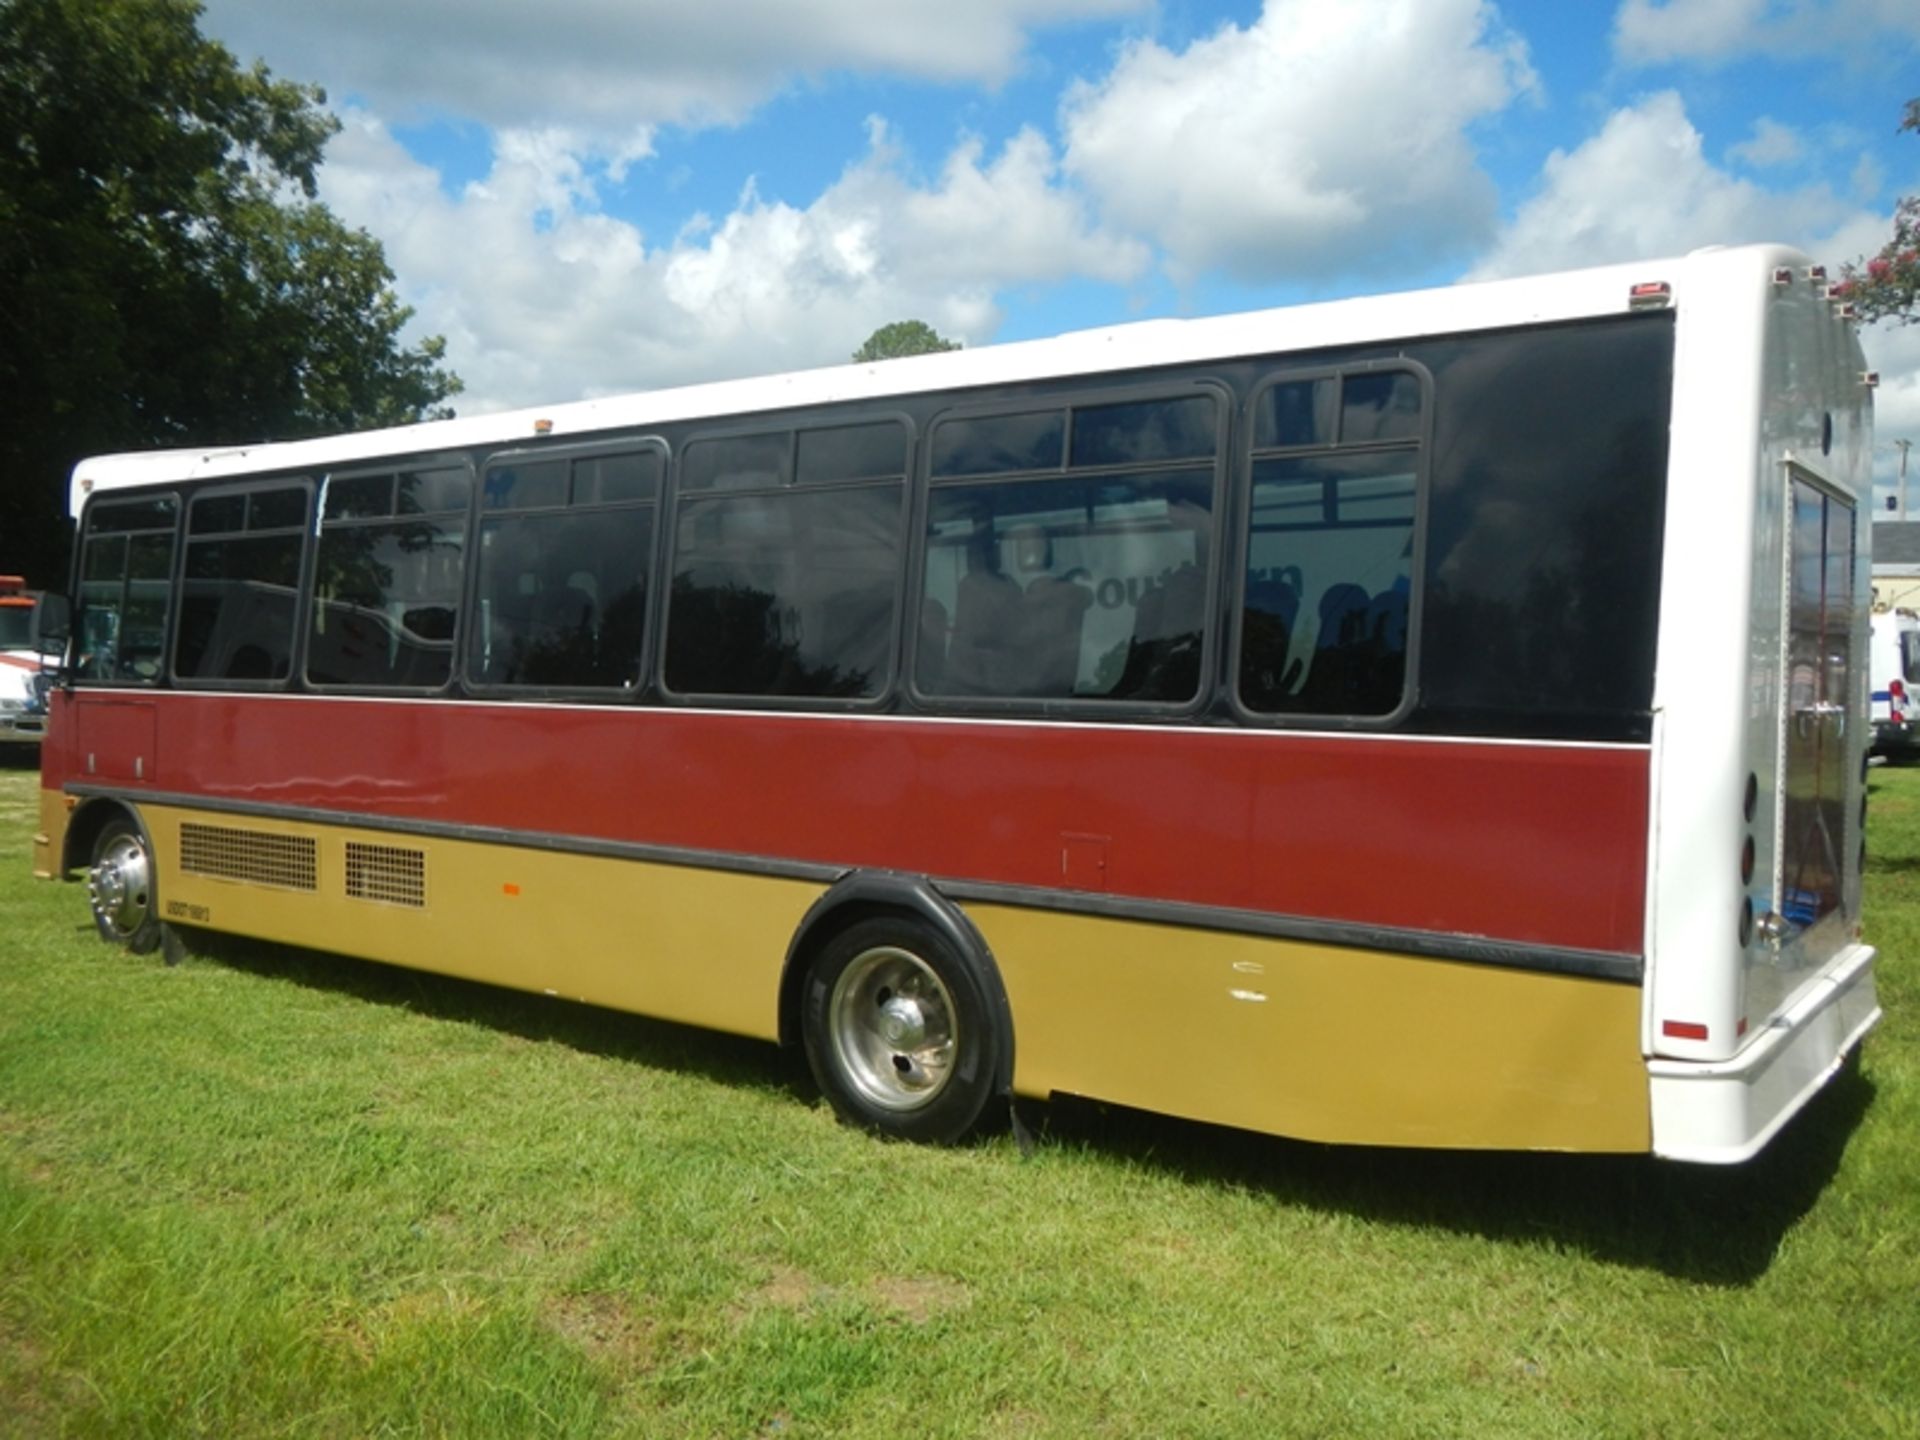 2007 FREIGHTLINER 30 passenger bus, Cummins dsl auto trans - 36,616 miles - VIN: - Image 4 of 7